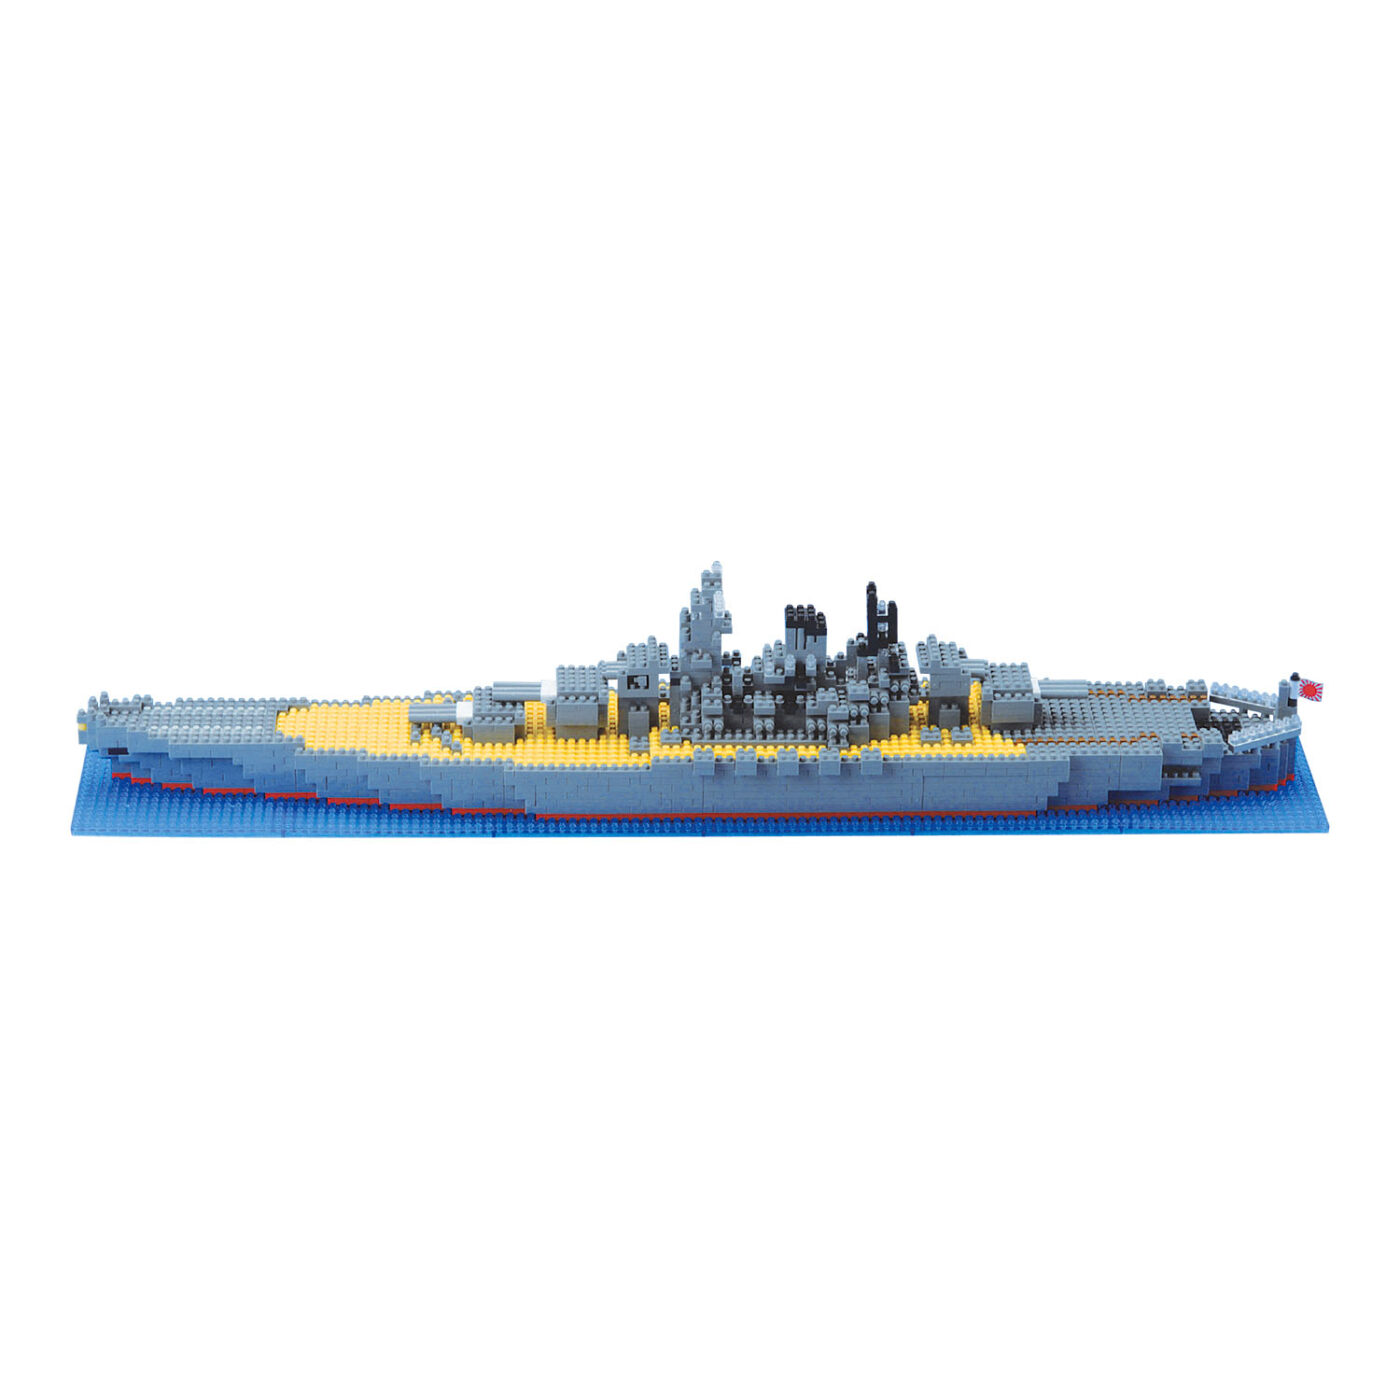 日本海軍 戦艦 大和の商品画像1